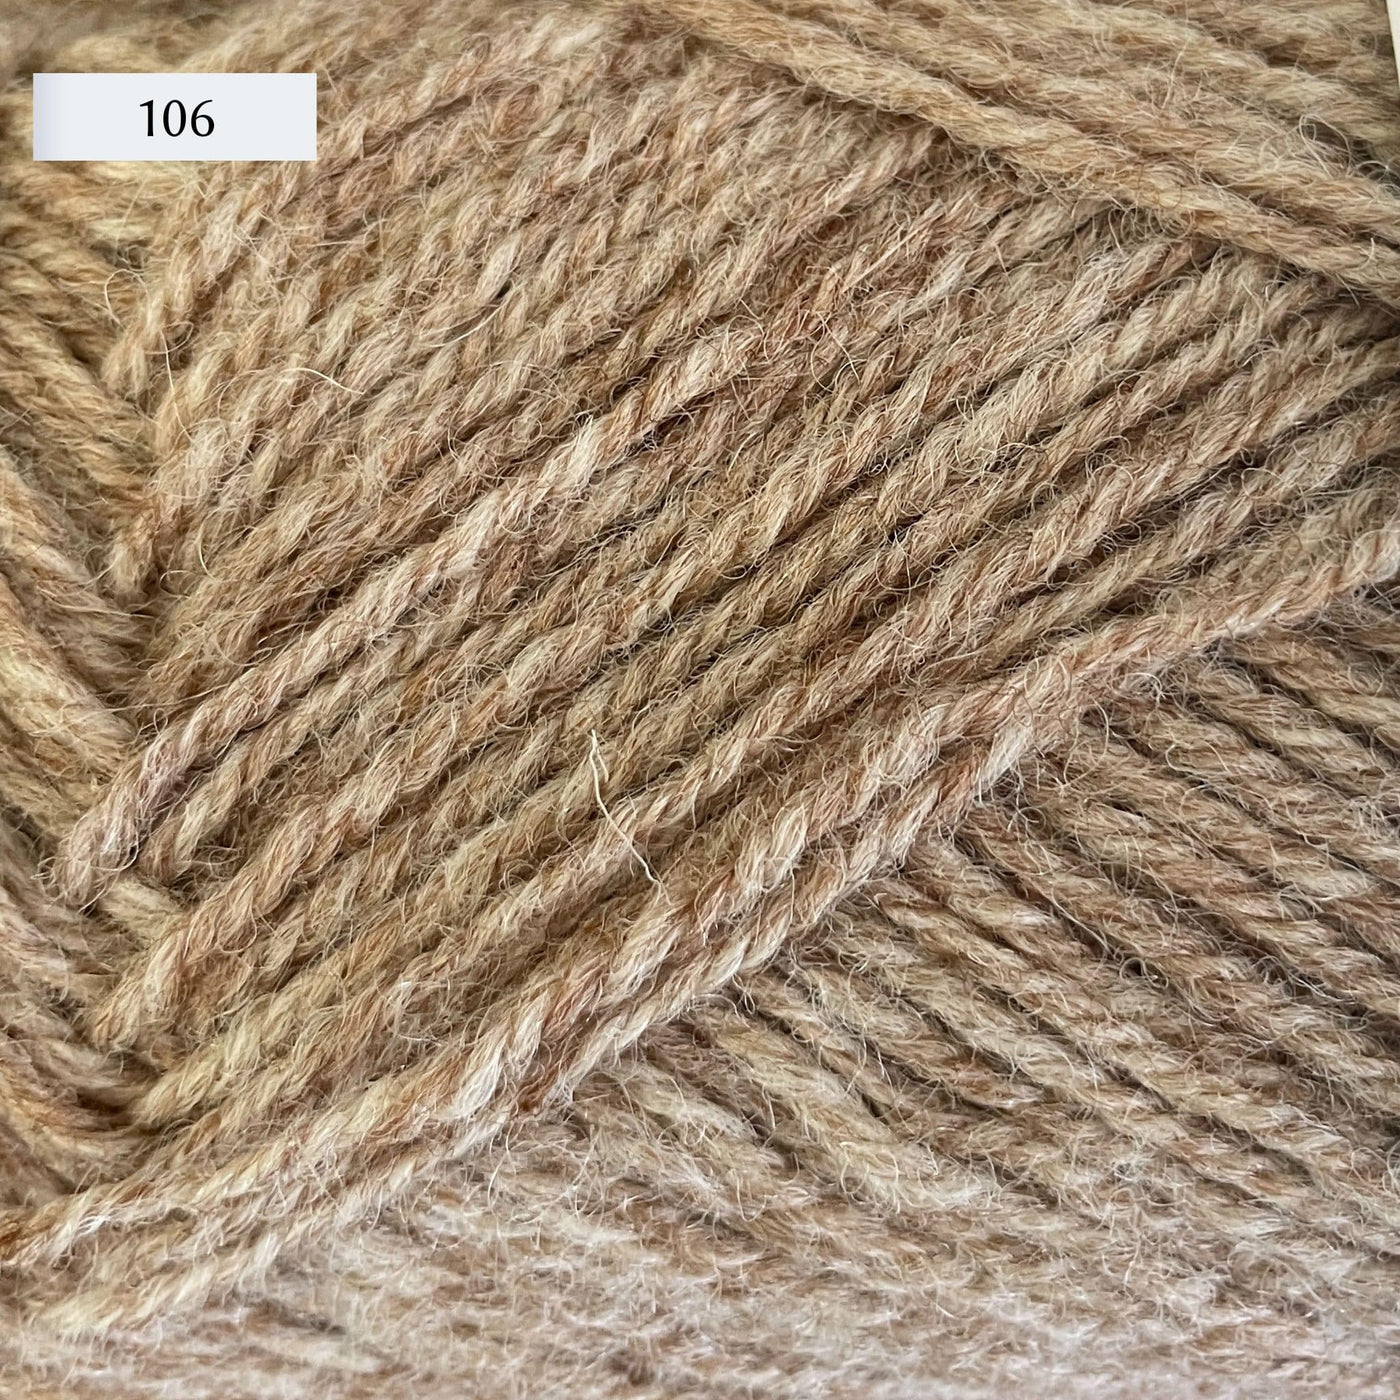 Rauma Strikkegarn, DK weight yarn, in color 106, a light heathered tan